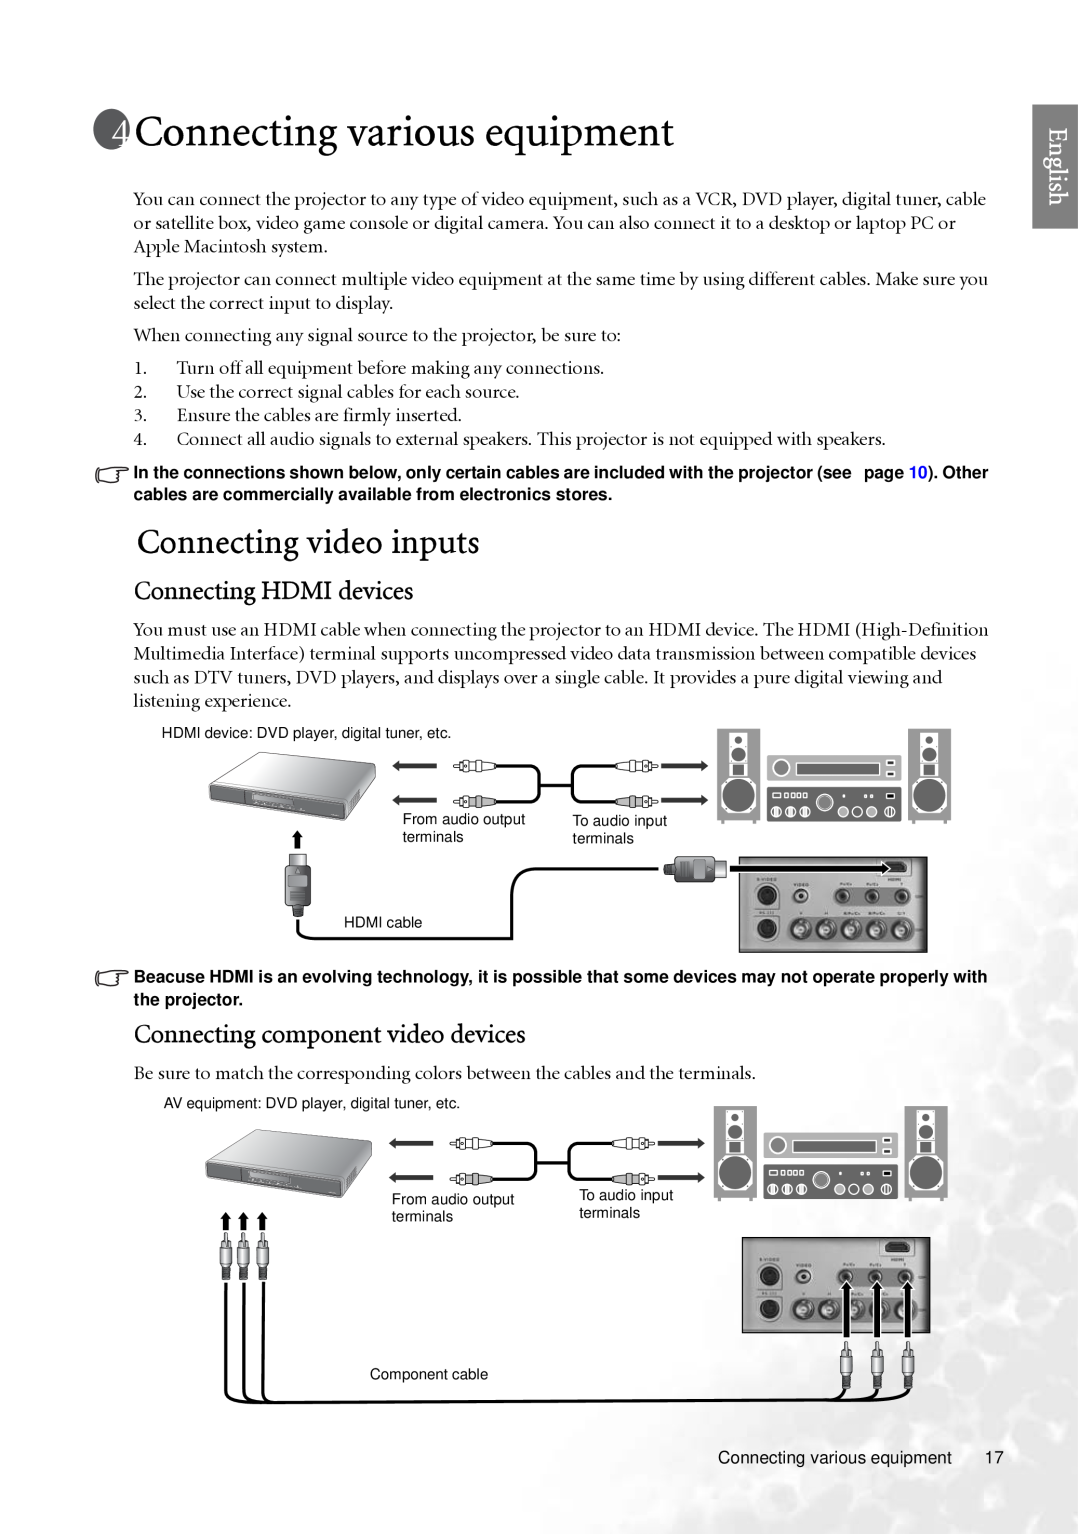 BenQ PE7700 user manual Connecting various equipment, Connecting video inputs, Connecting HDMI devices, English 